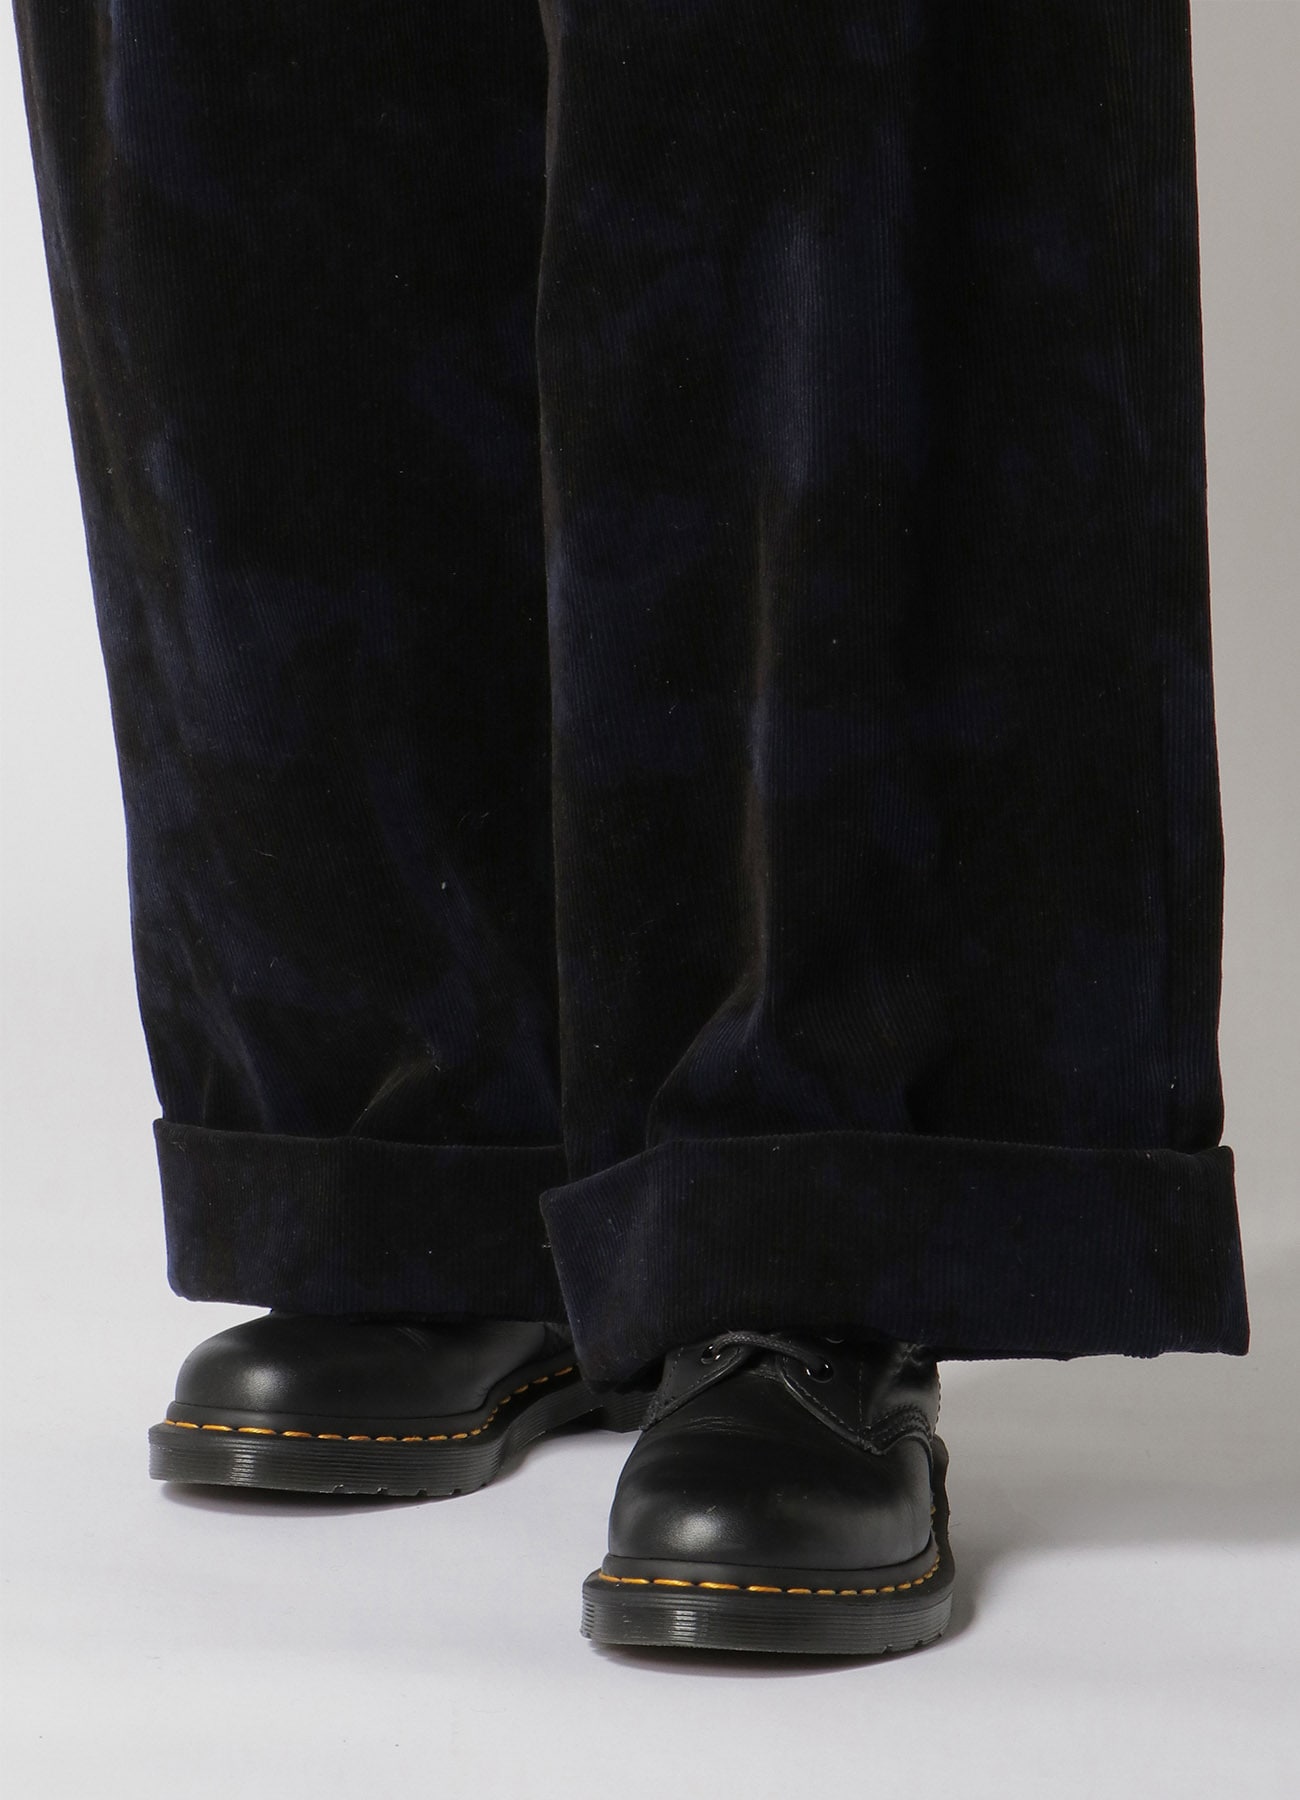 Retro Vintage Menswear Street Style w/ Newsboy Cap, Star Wars Necktie, Cuffed  Corduroy Pants, Takeo Kikuchi Crossbody Bag & Vintage Boots – Tokyo Fashion